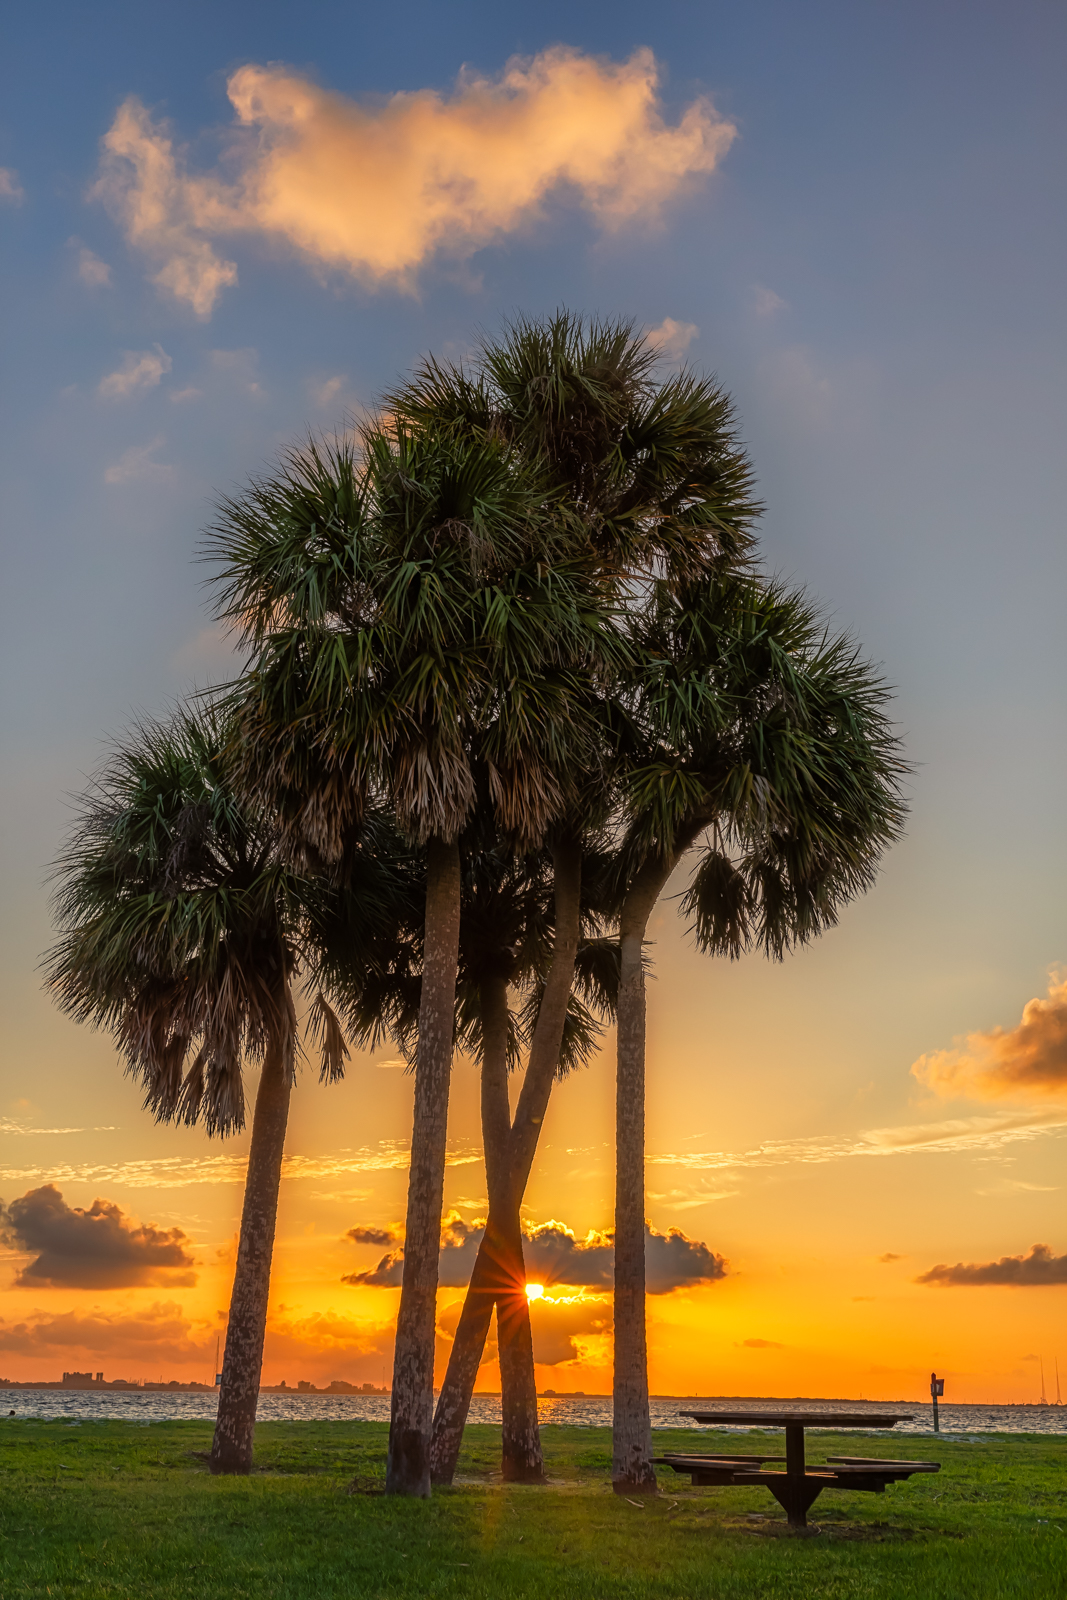 Crossing Palms Sunburst, Tampa, Florida